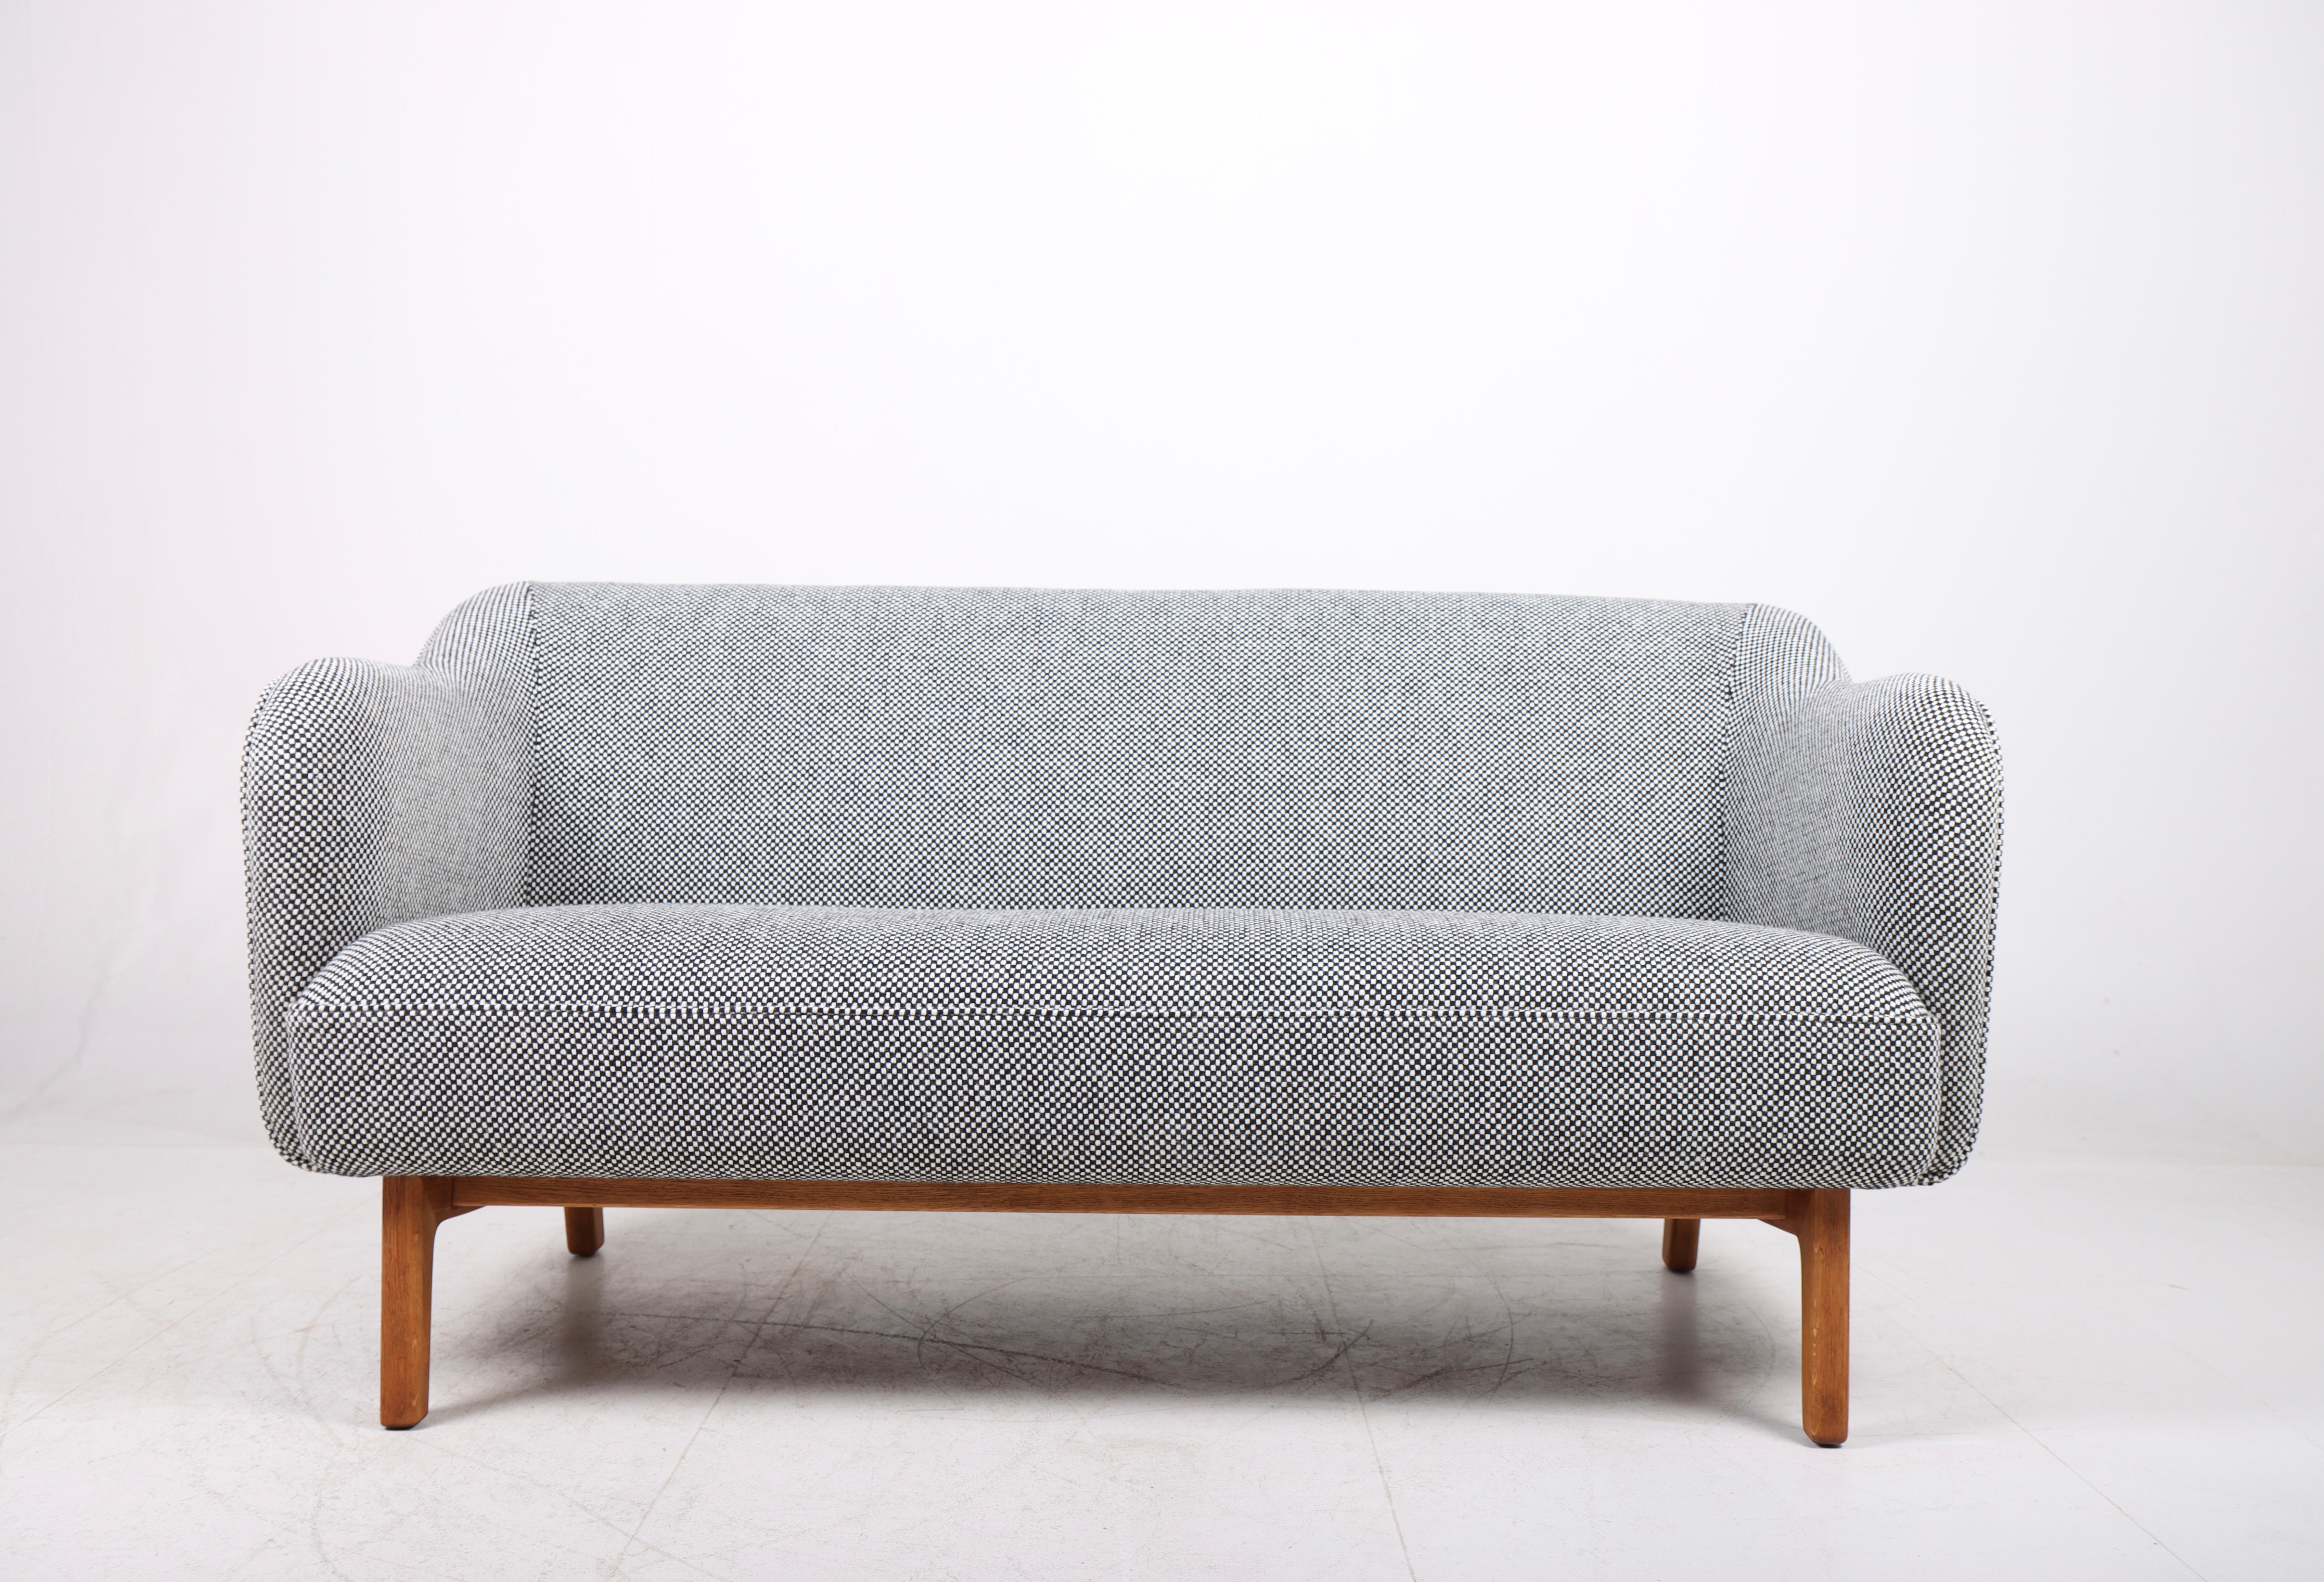 Scandinavian Modern Rare Midcentury Sofa by Tove & Edvard Kindt Larsen, 1950s For Sale